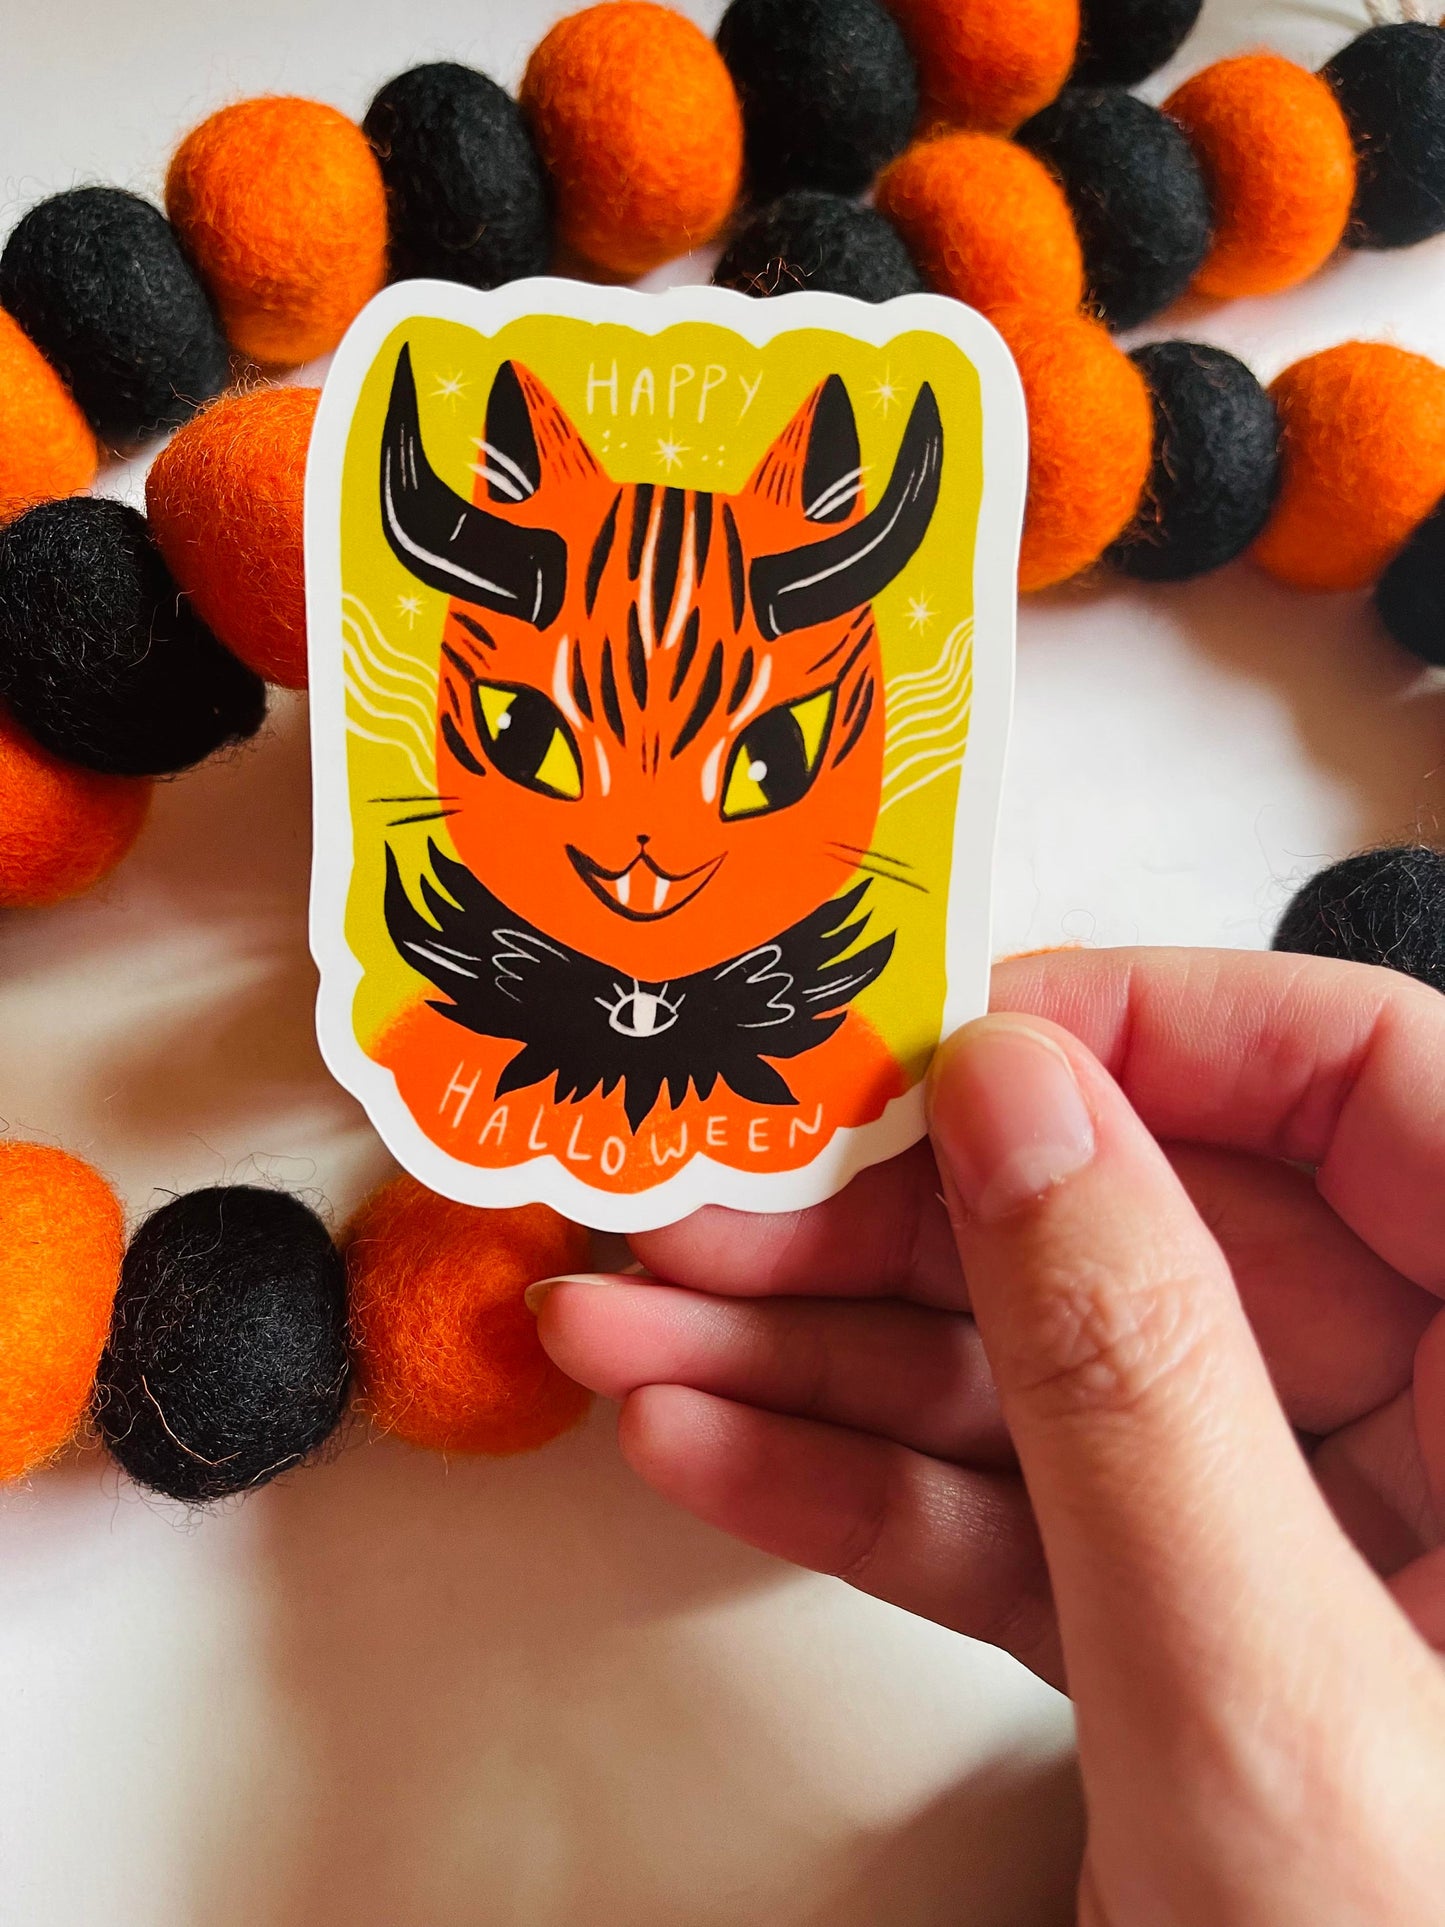 happy halloween orange cat vinyl sticker